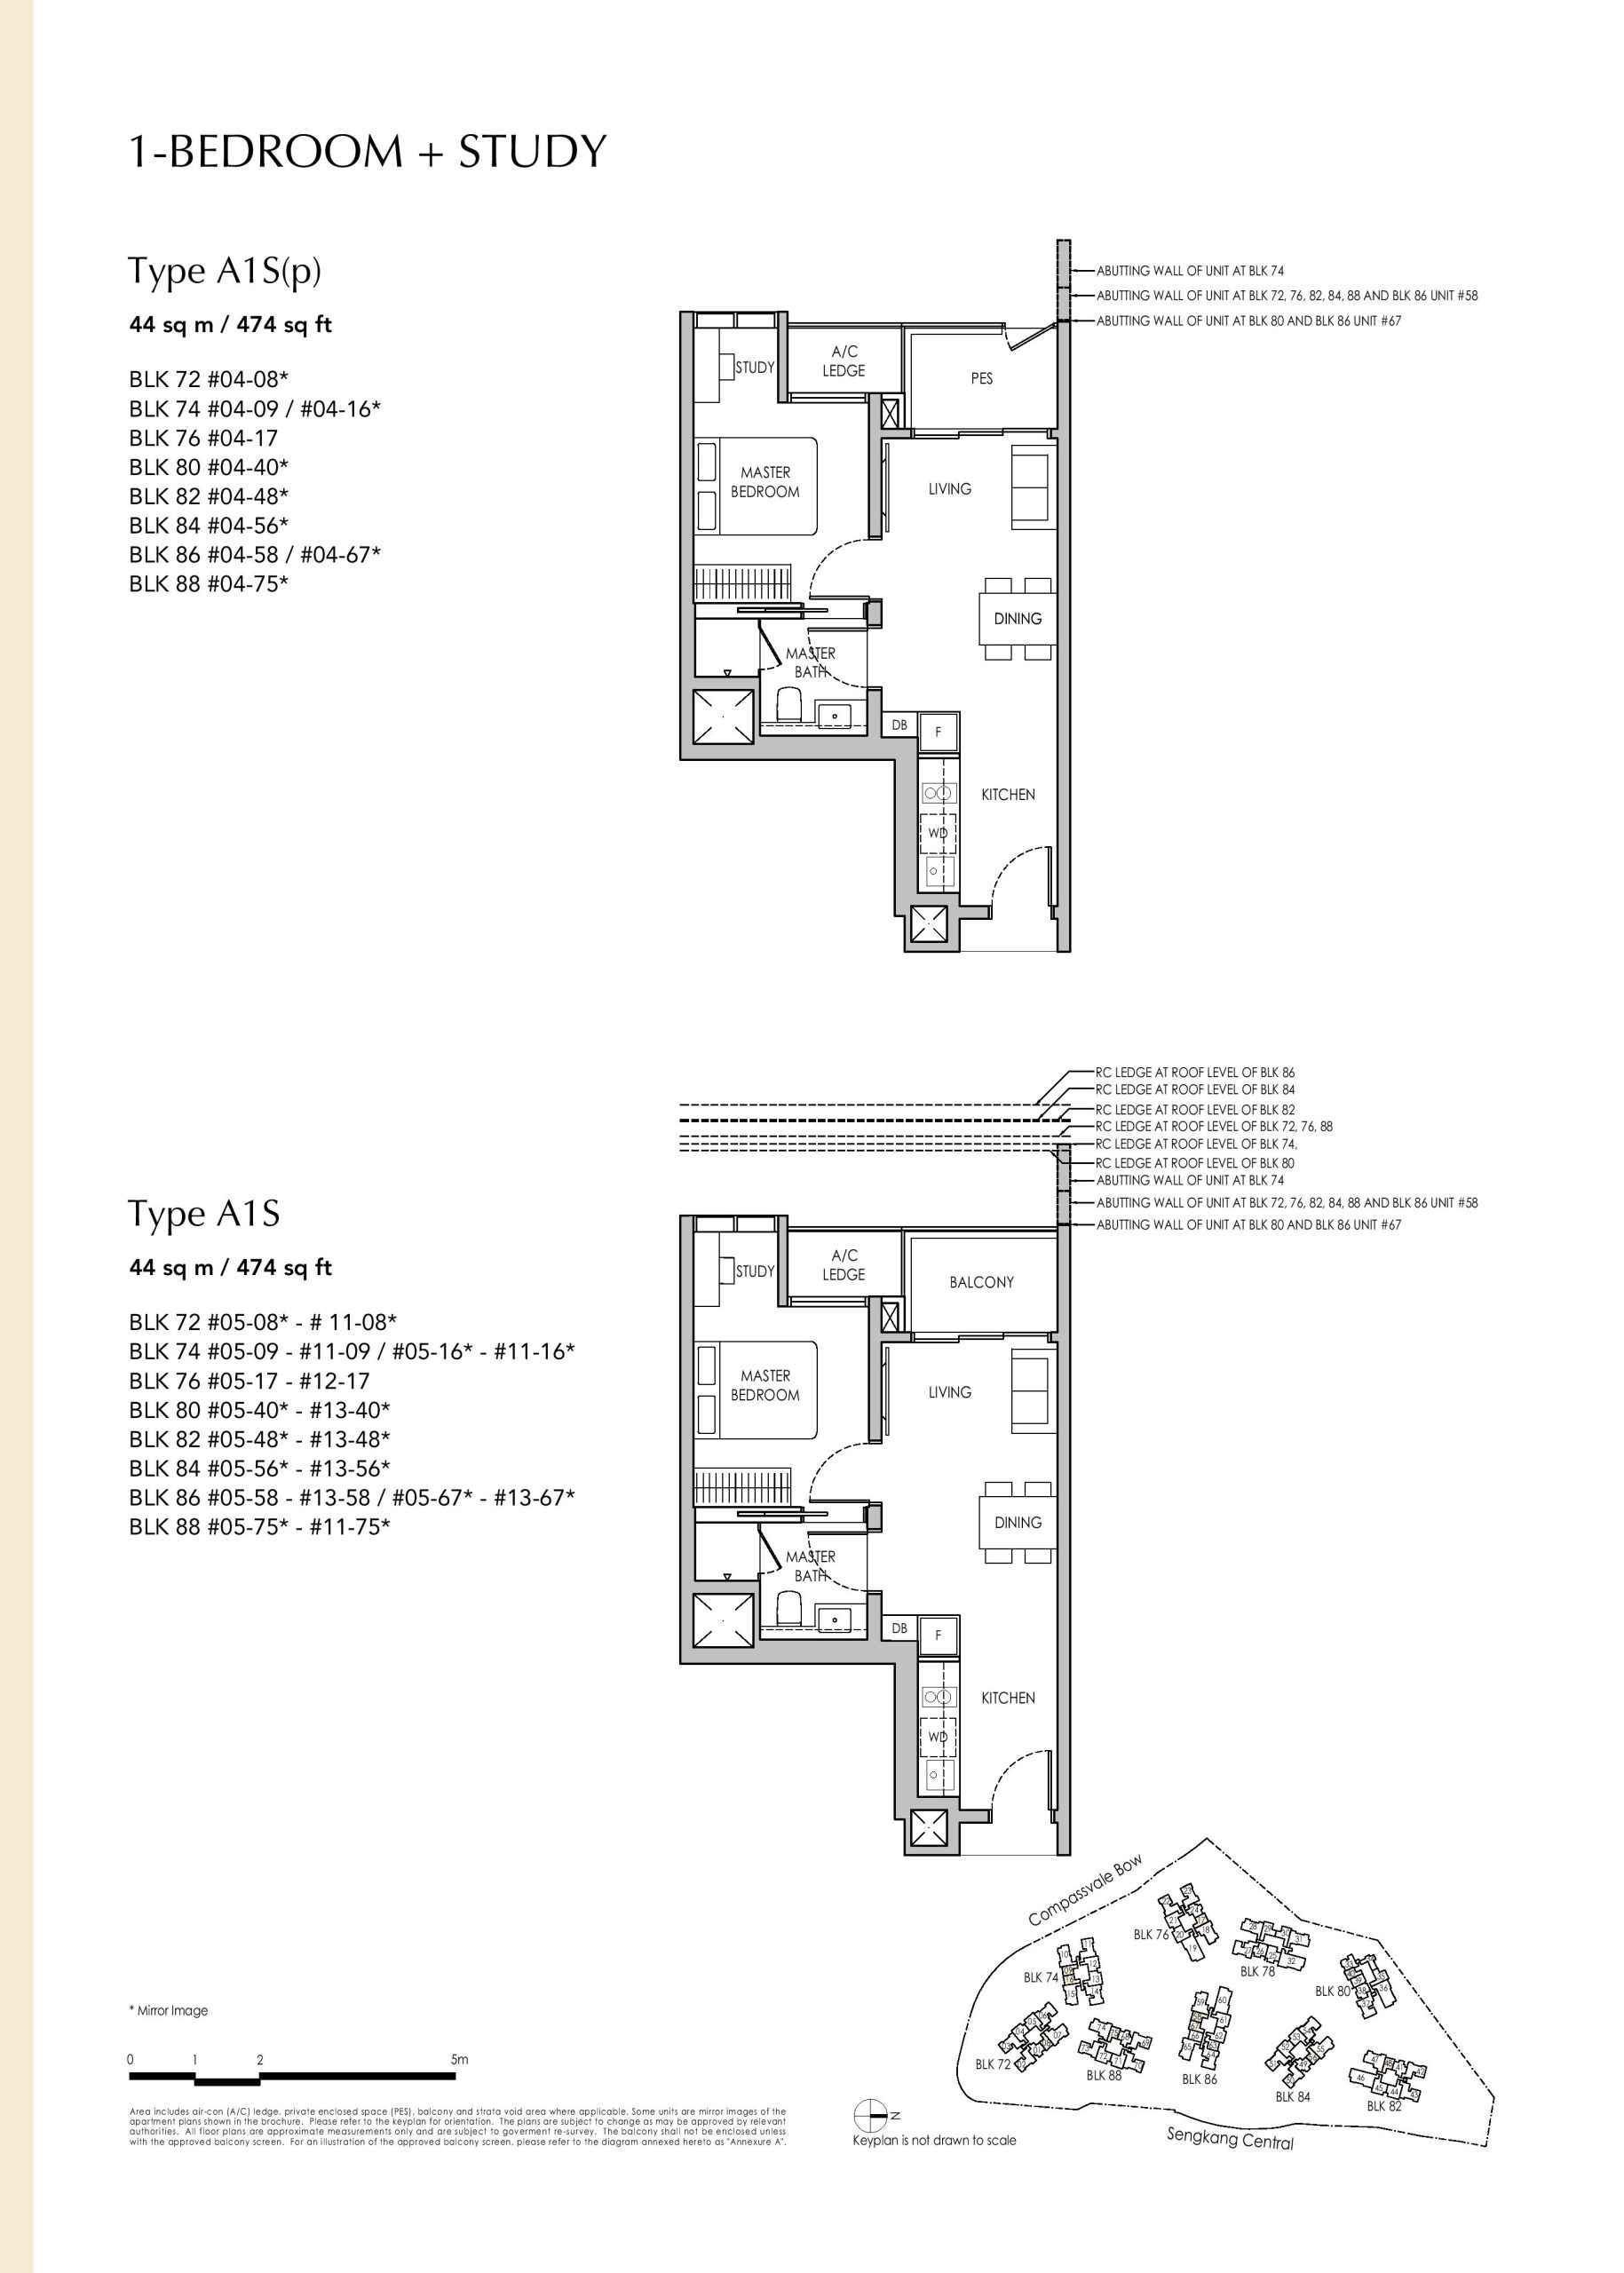 Sengkang Grand Residences 1 Bedroom + Study Type A1S(p), A1S Floor Plans